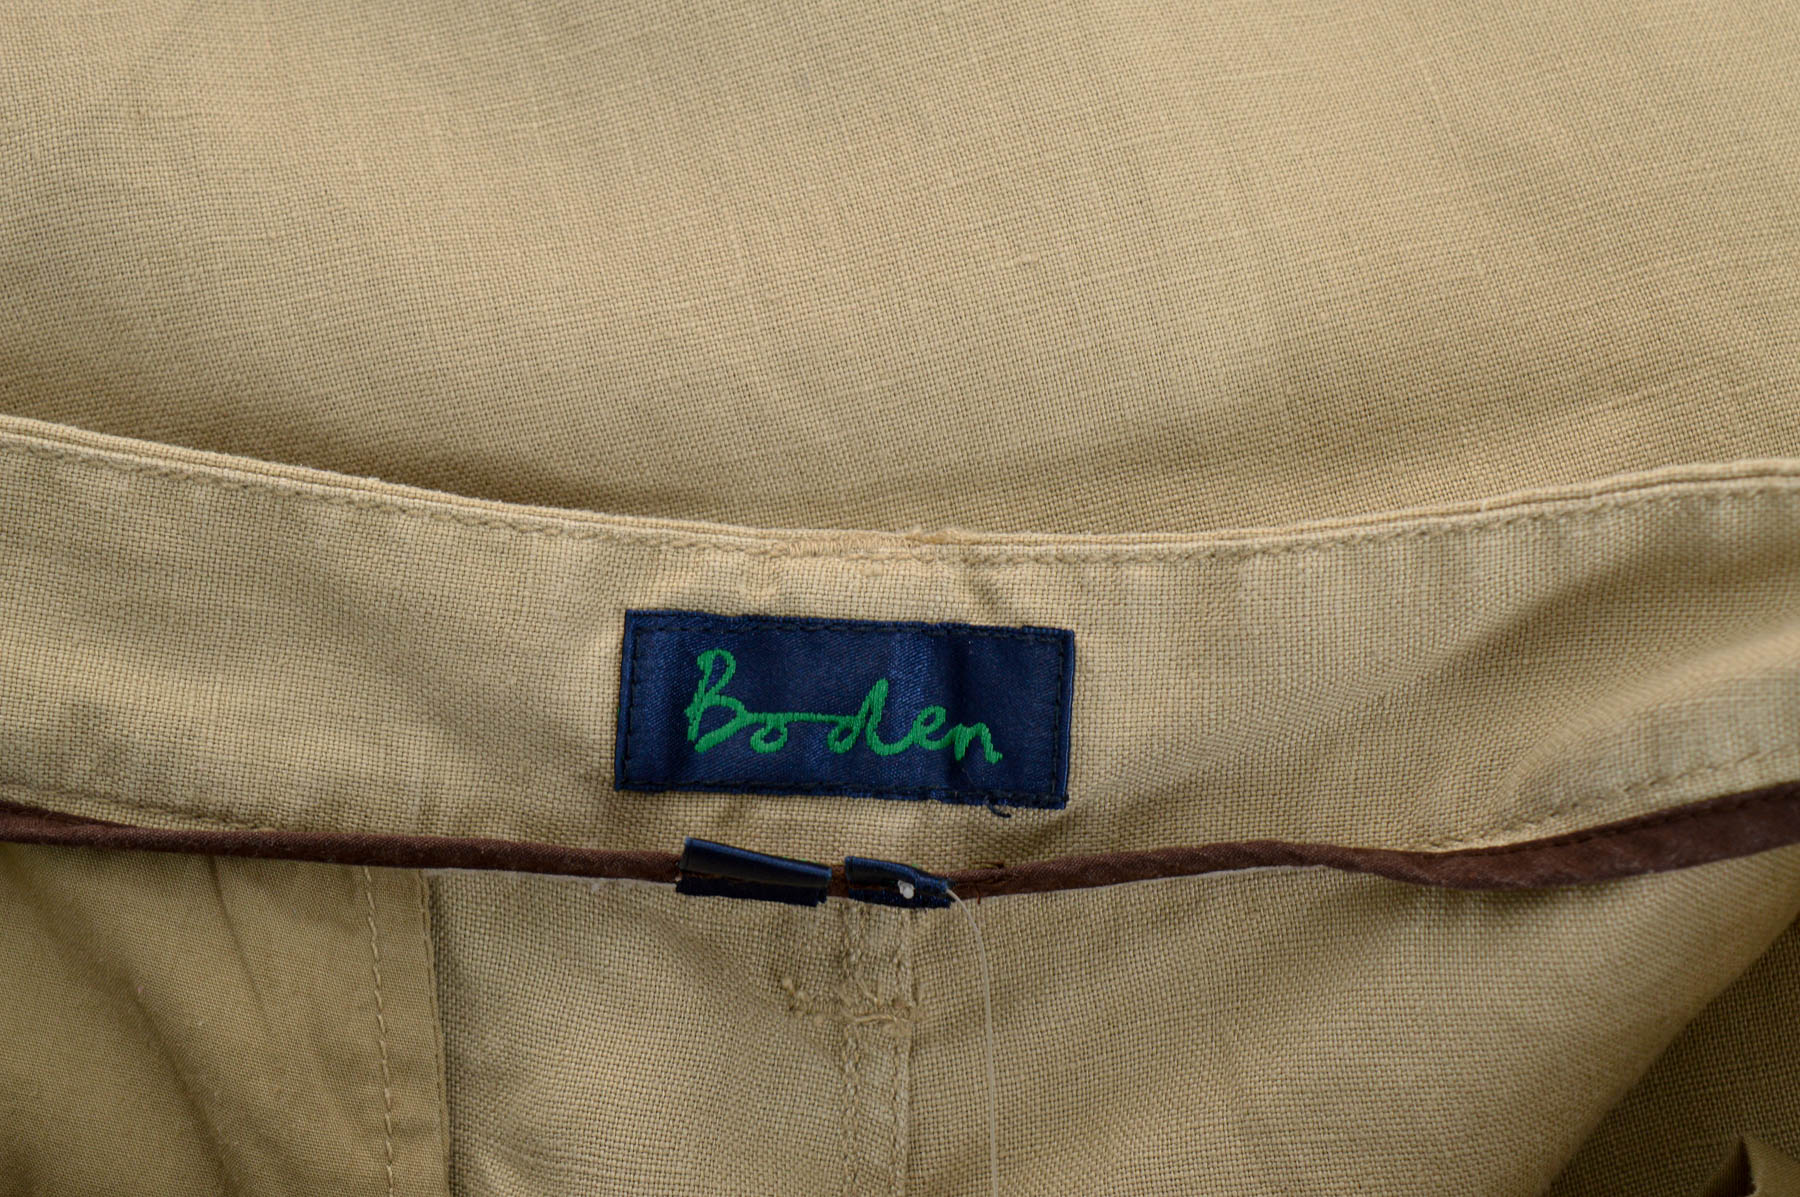 Men's shorts - Boden - 2